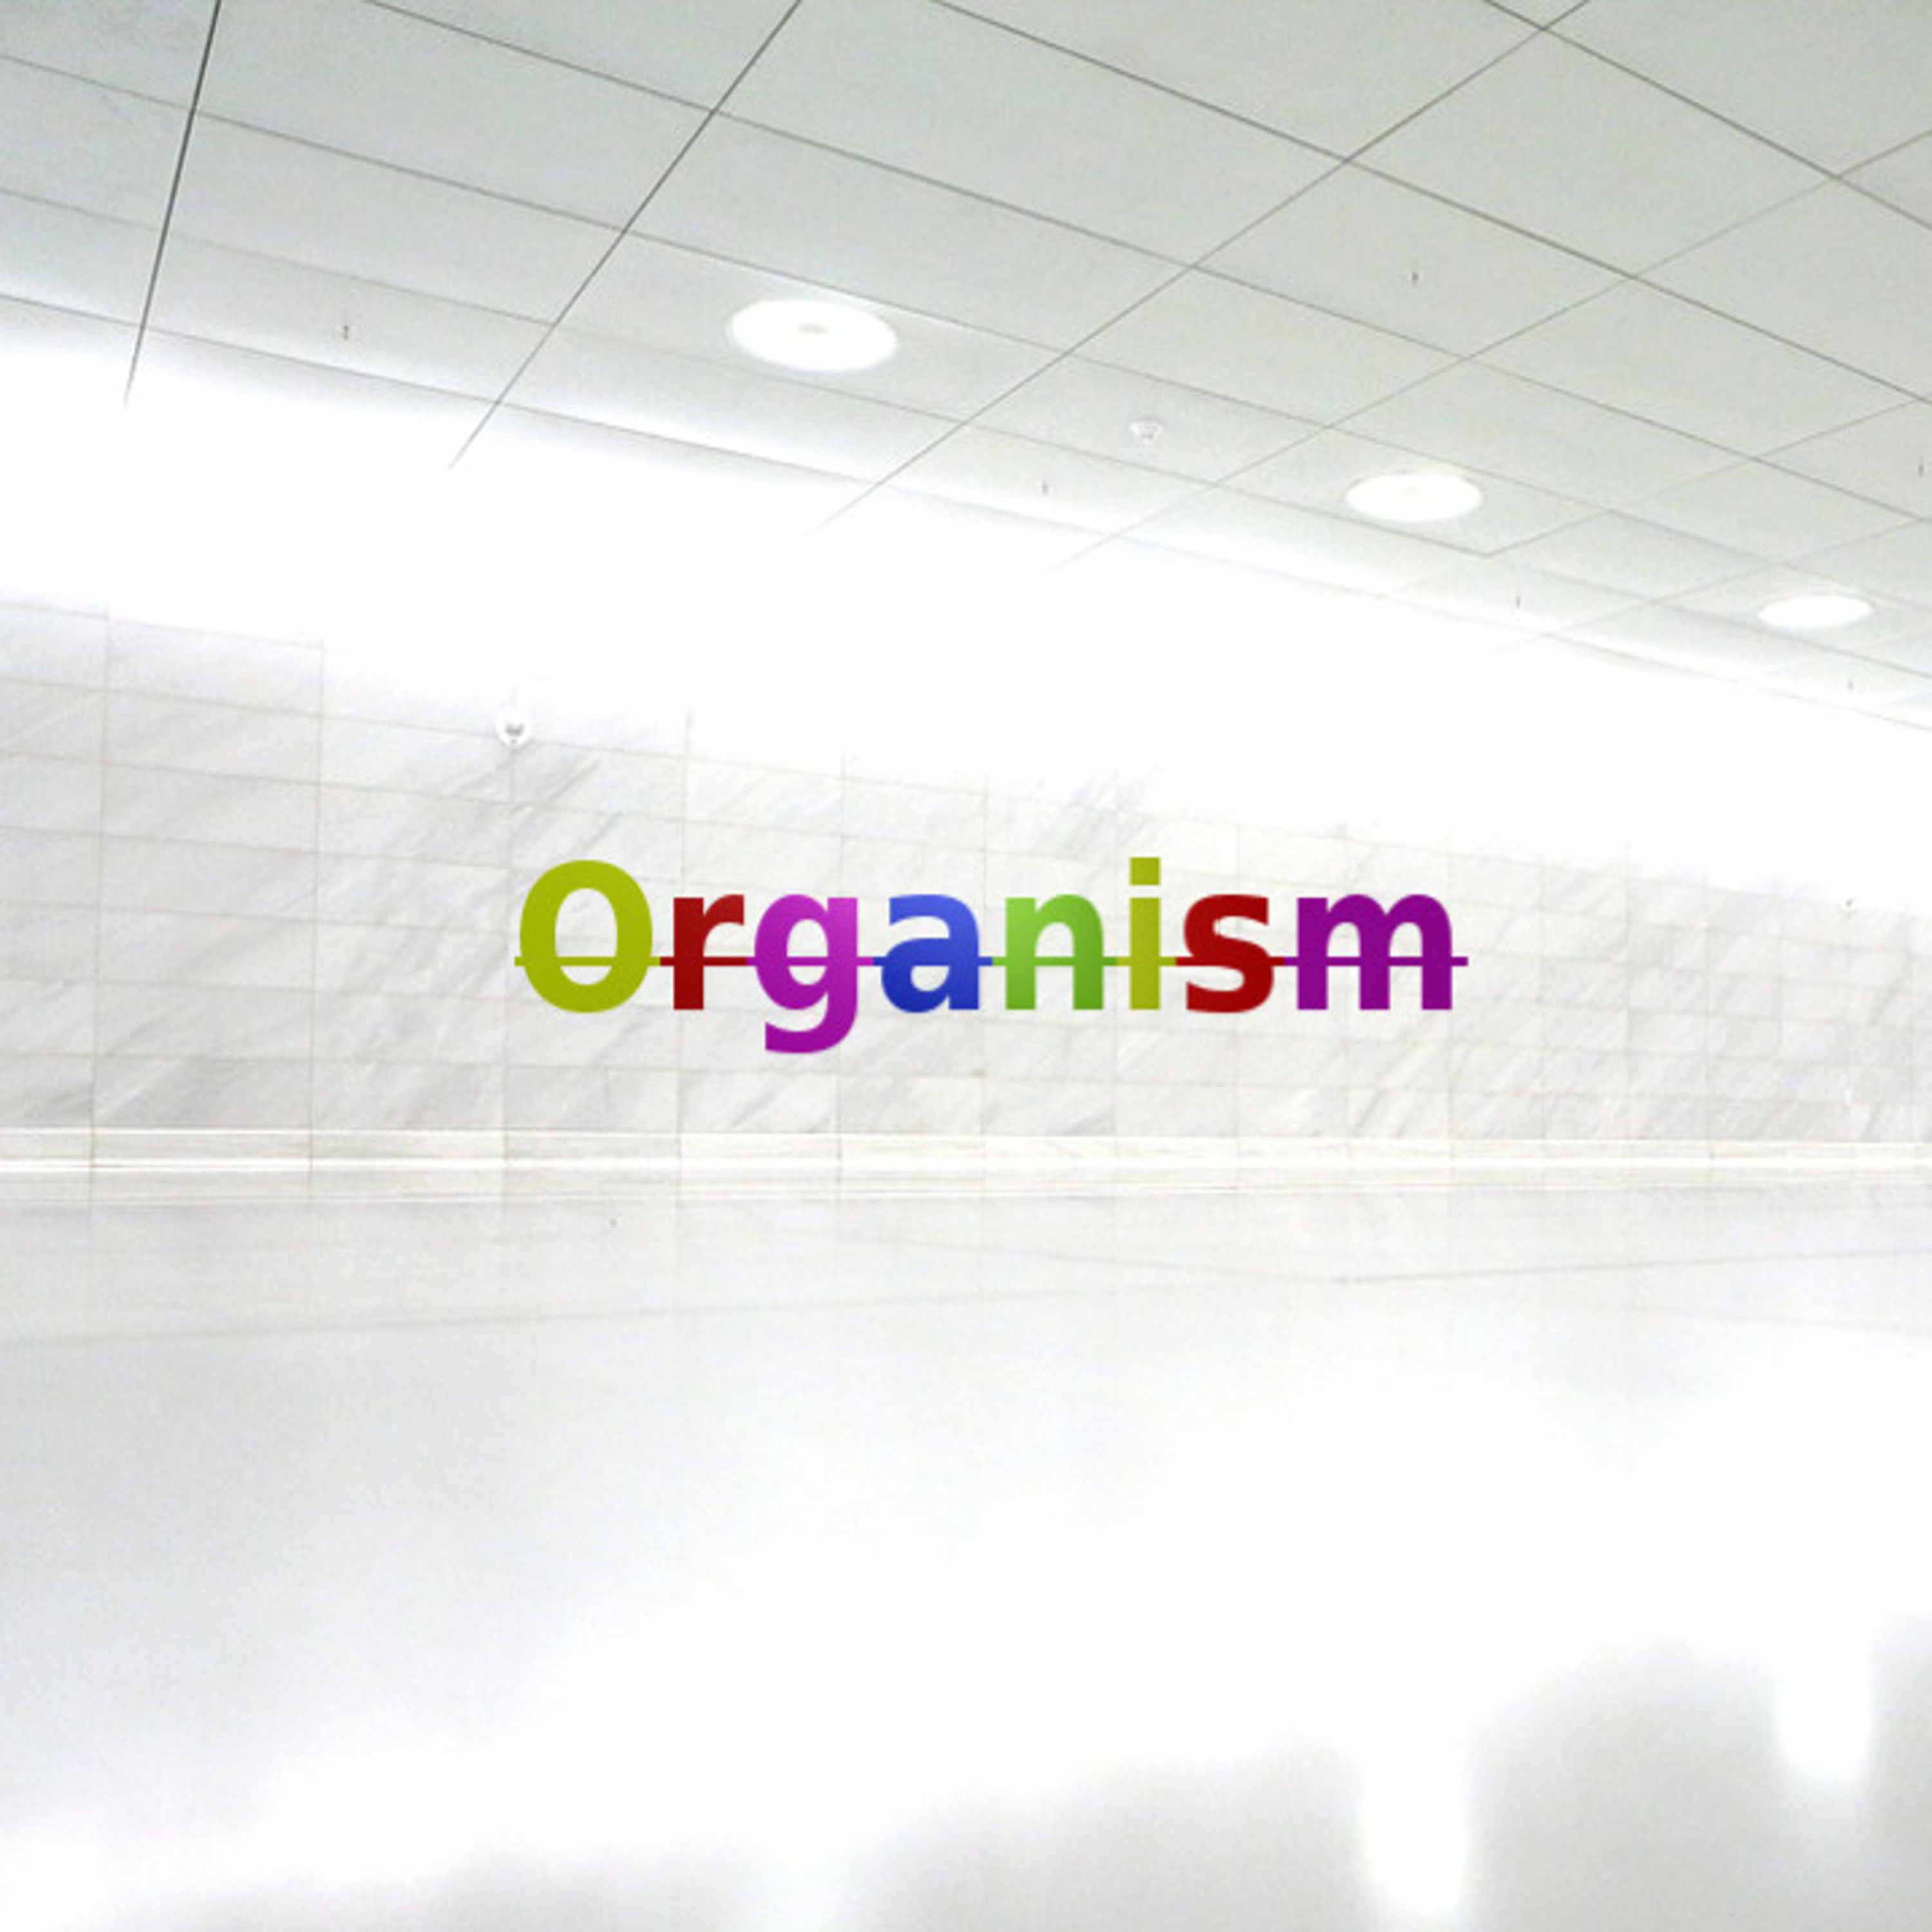 "Organism" Podcast